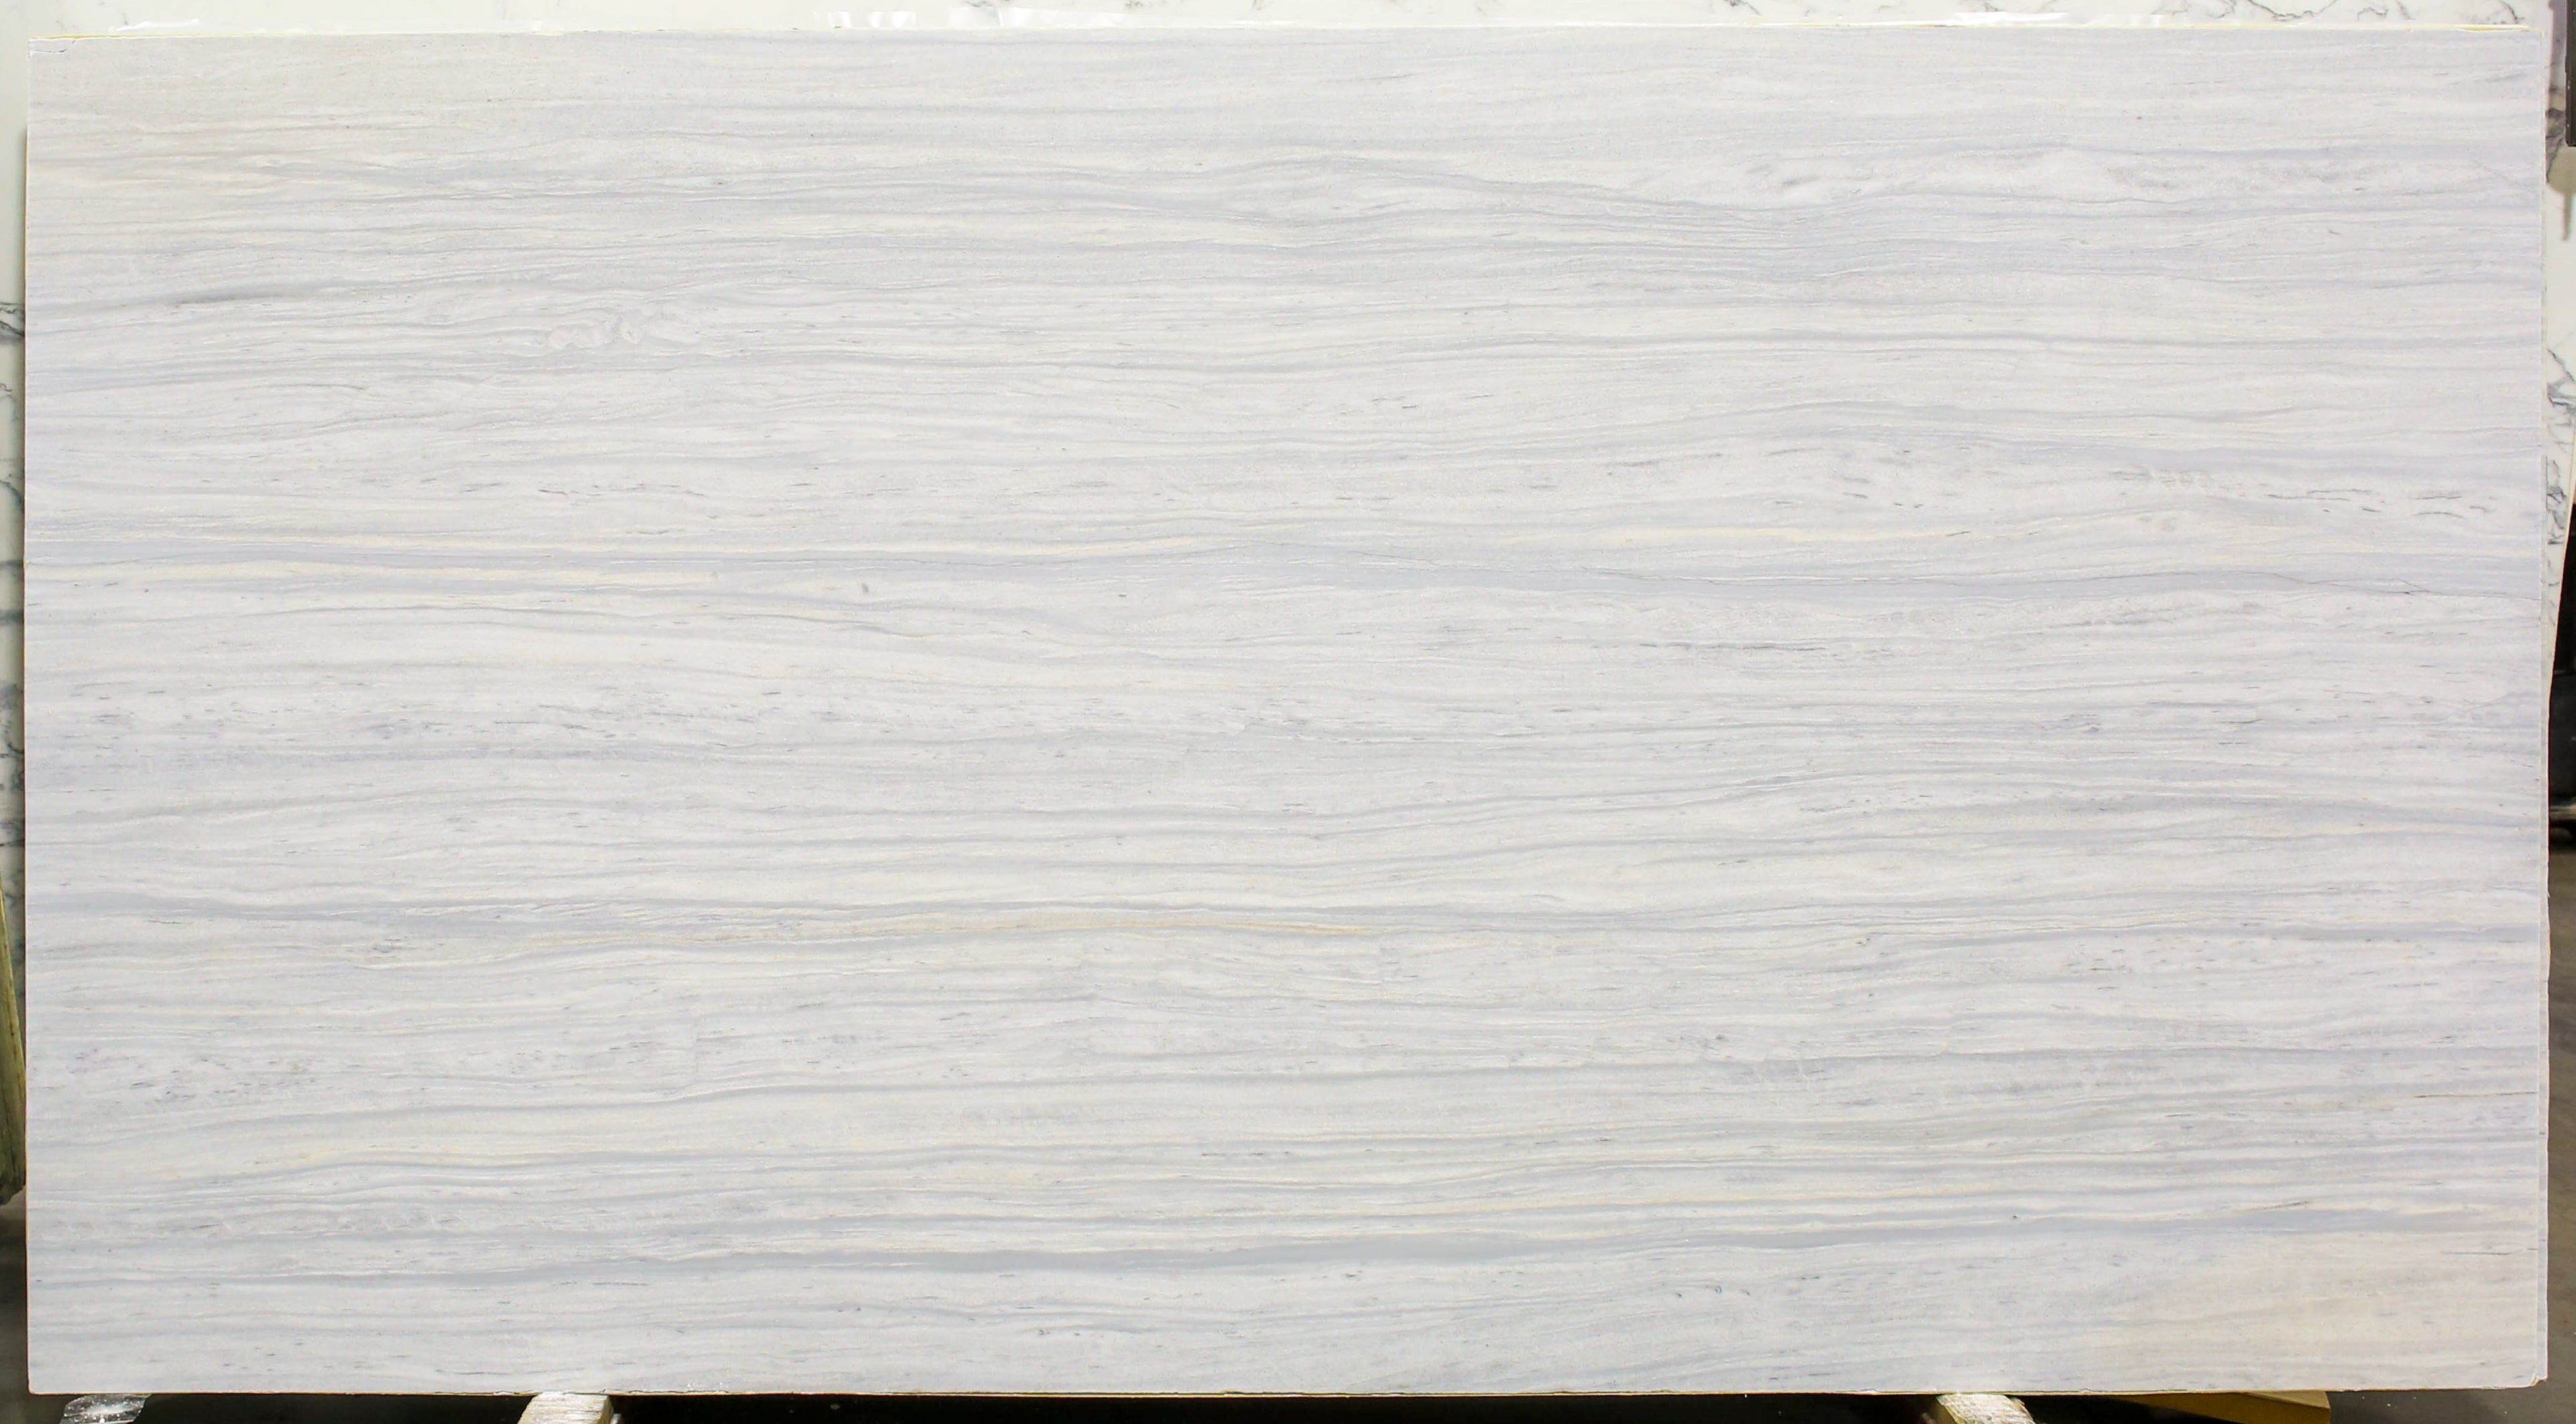  Minerva Grey Marble Slab 3/4  Honed Stone - 9180122#85 -  61x113 